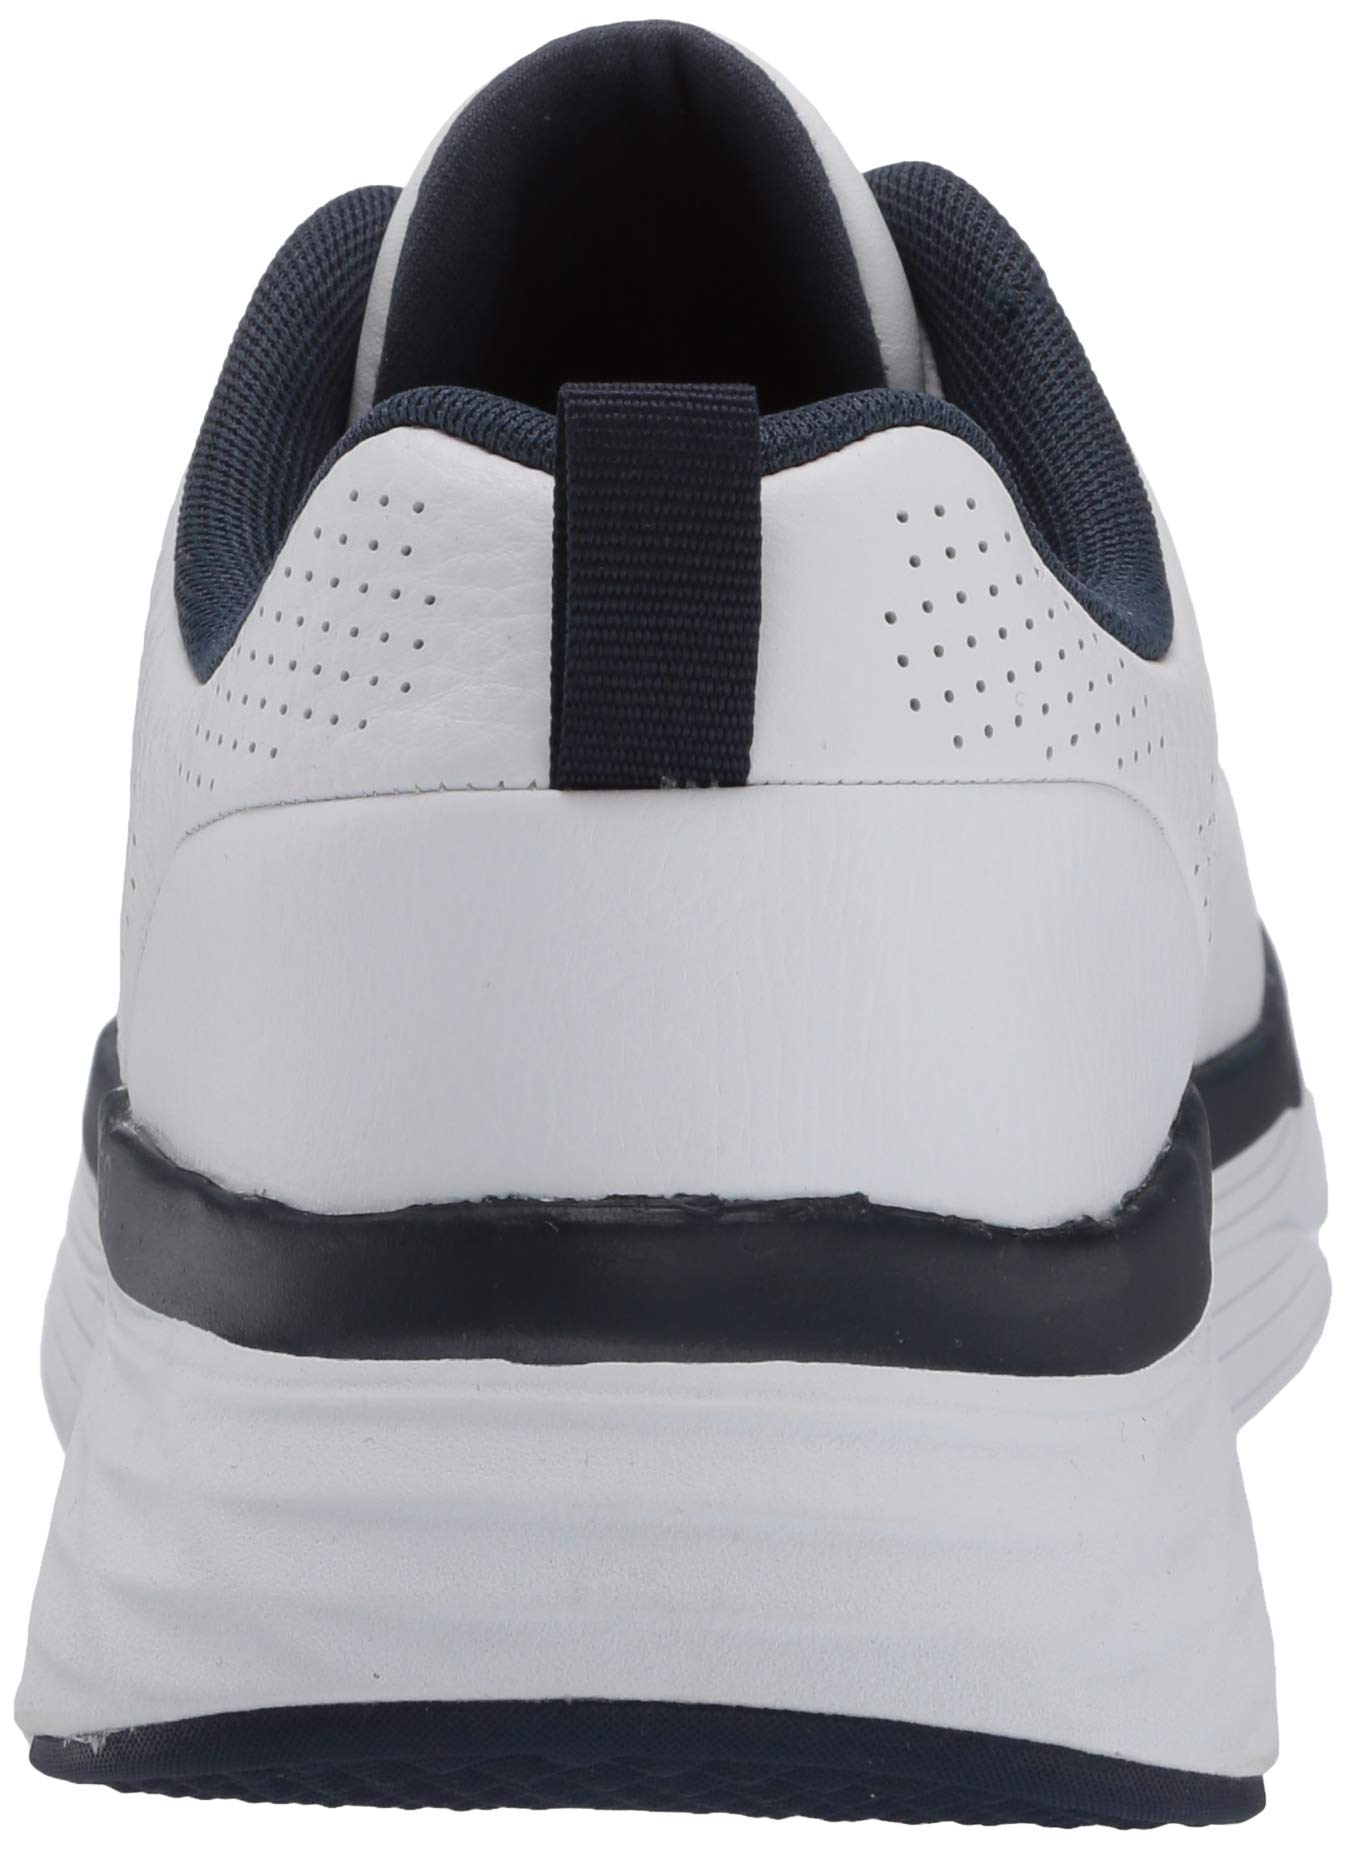 Skechers Men's Max Cushioning Elite Lucid-Athletic Leather Cross-Training Tennis Shoe Sneaker, White/Navy, 12 X-Wide